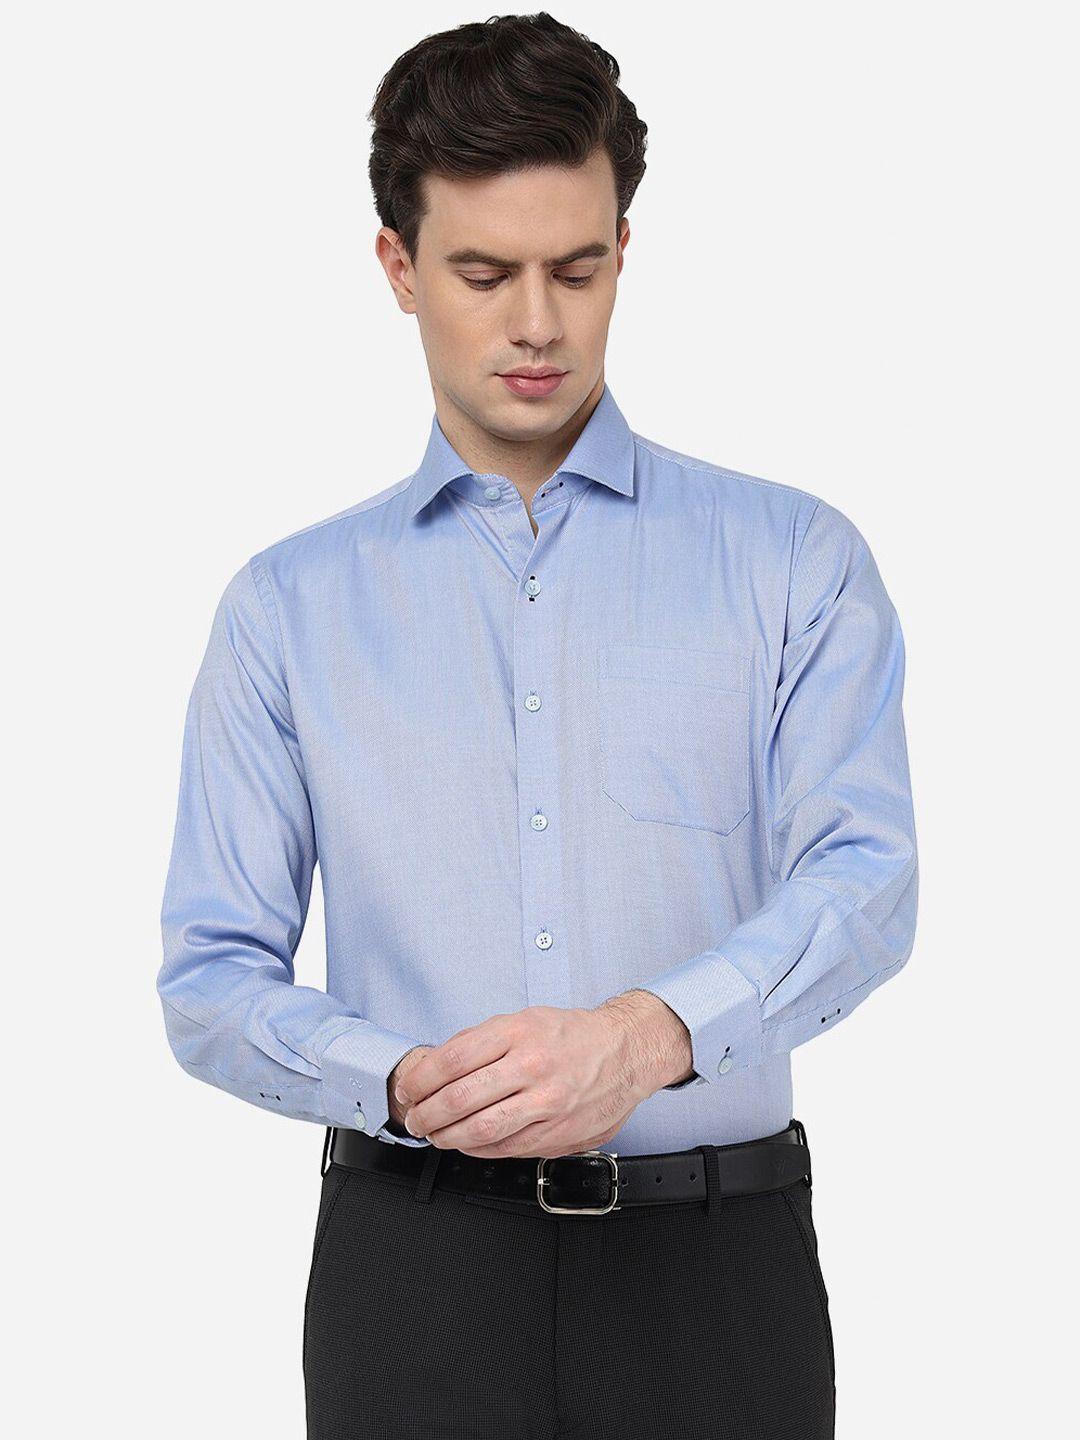 JADE BLUE Spread Collar Long Sleeve Opaque Regular Fit Formal Shirt